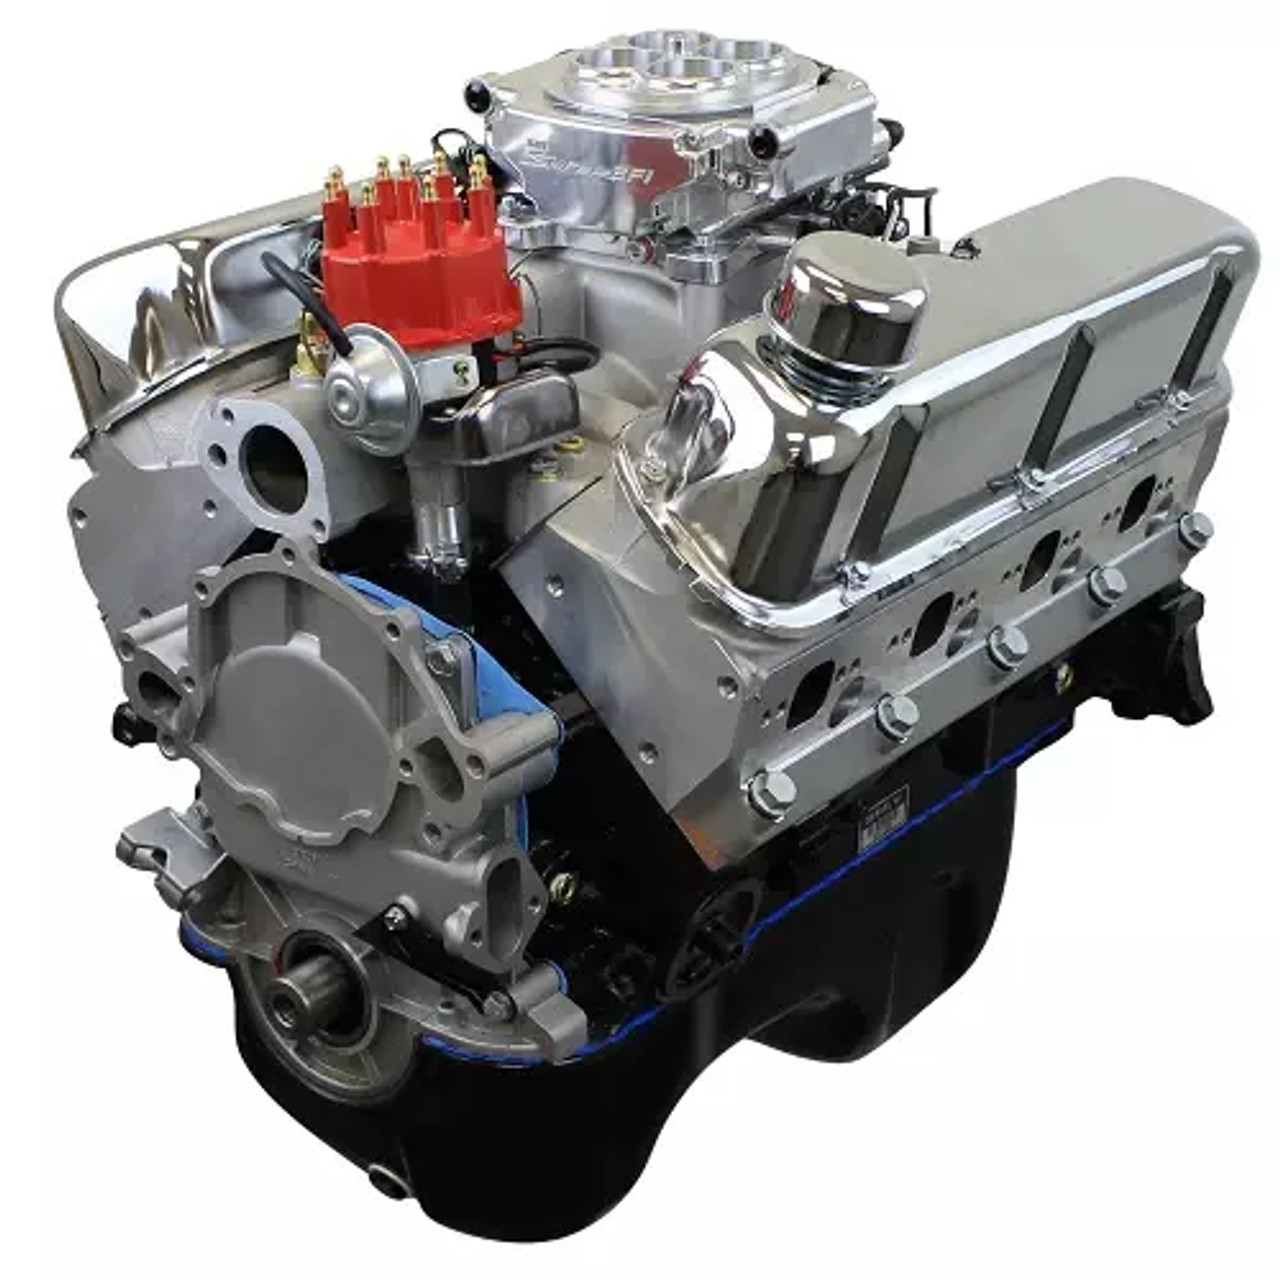 SBF EFI 302 Crate Engine 361 HP - 334 Lbs Torque